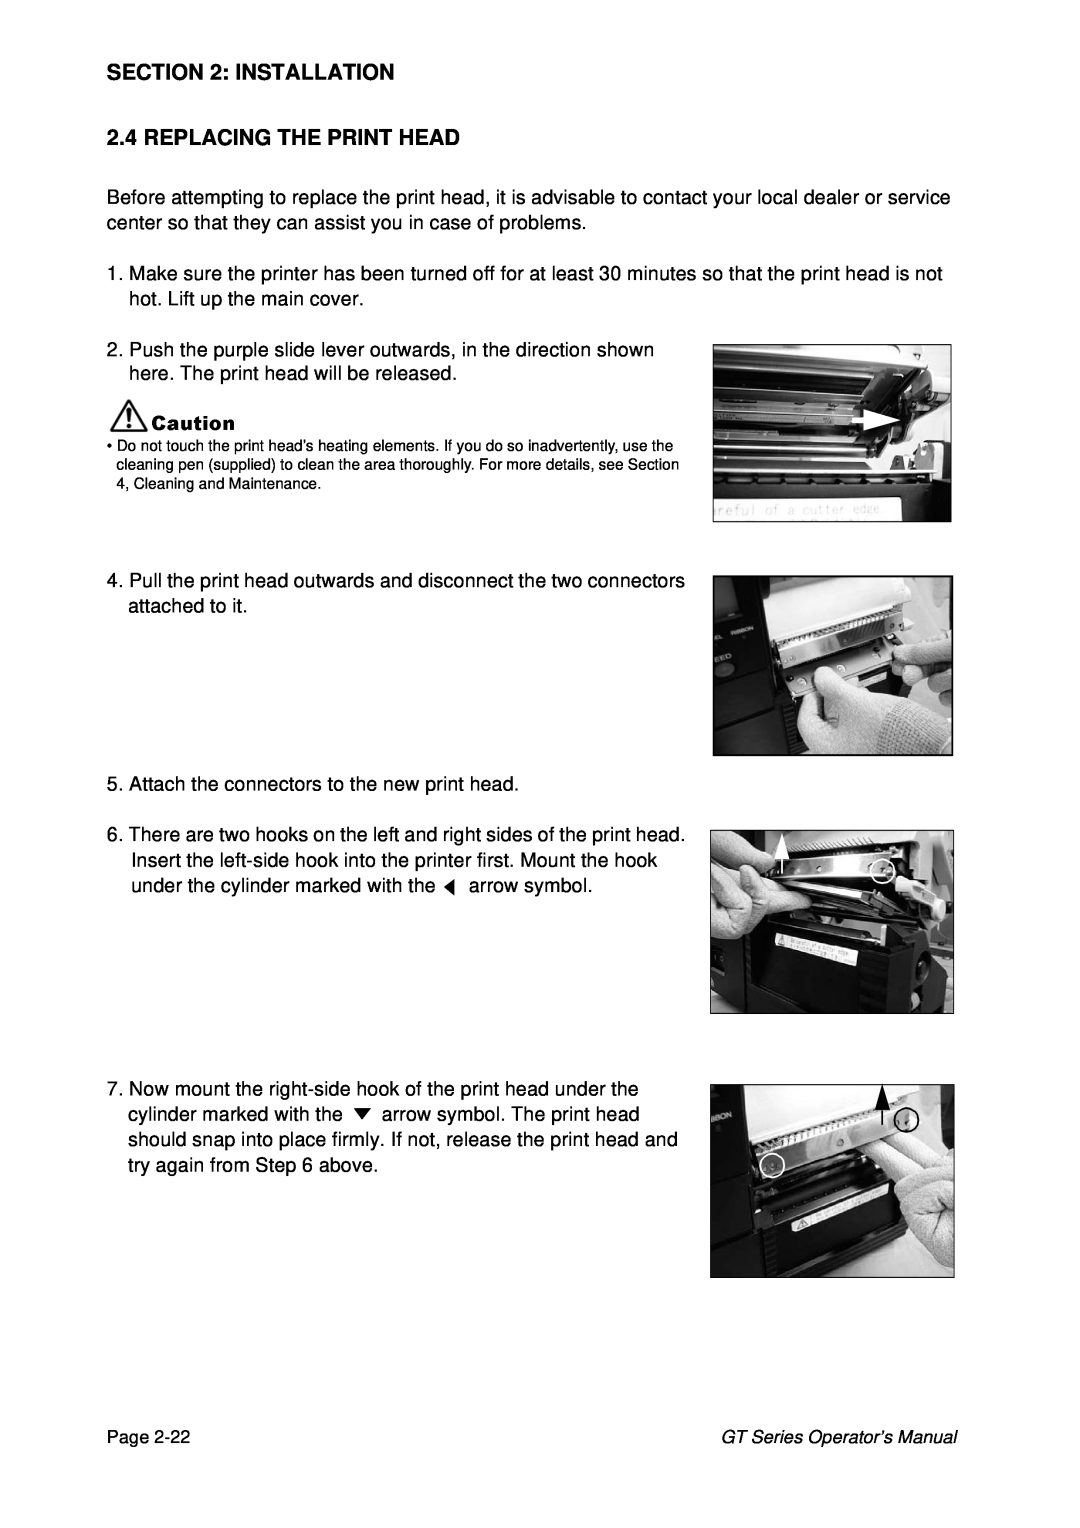 SATO GT424 manual INSTALLATION 2.4 REPLACING THE PRINT HEAD 